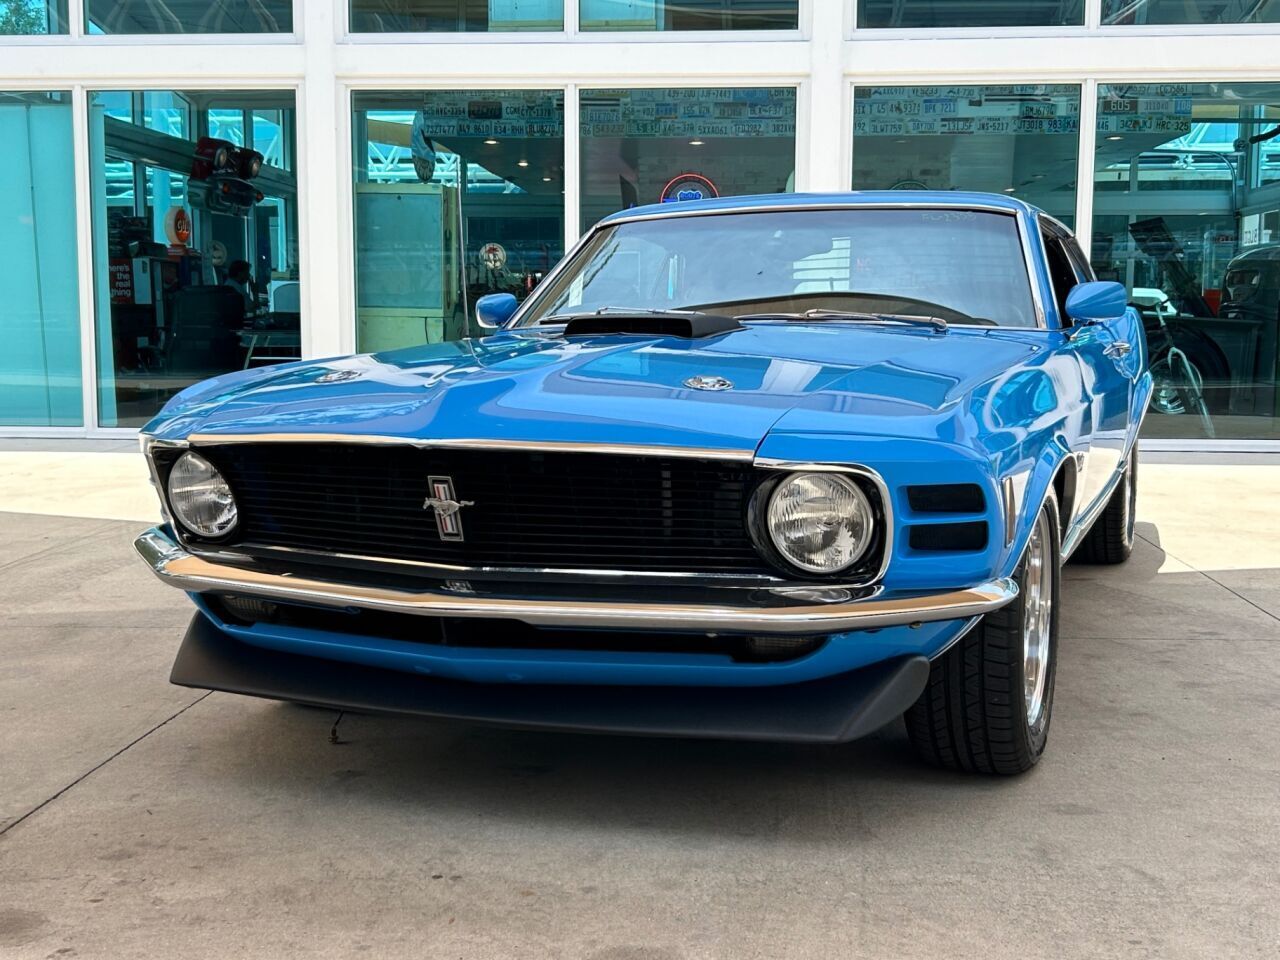 Ford Mustang 1970 à vendre